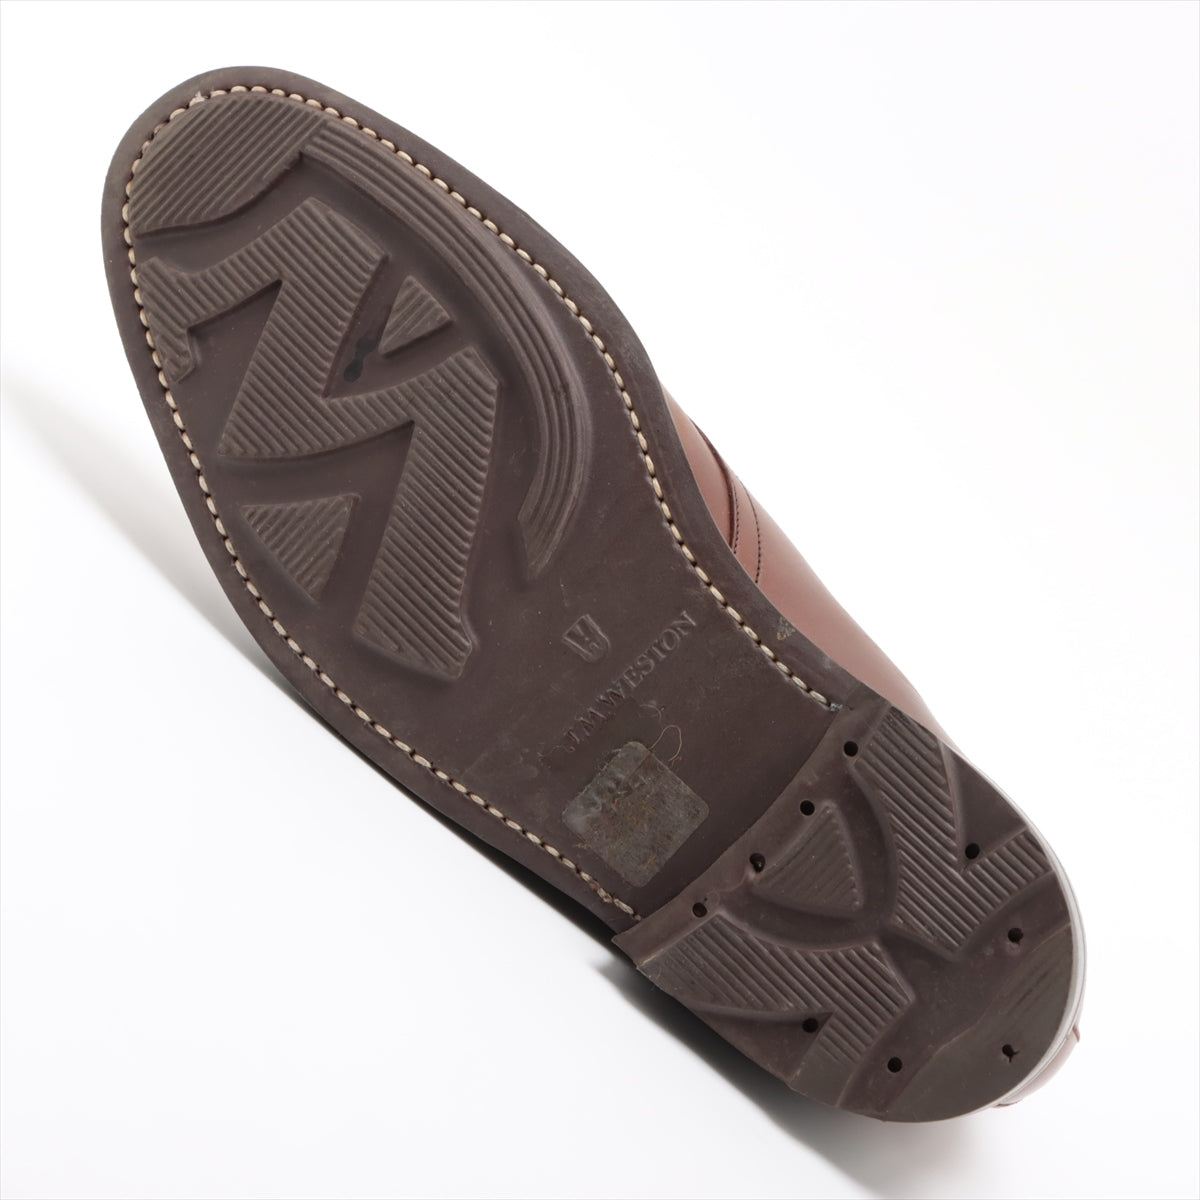 James Waiston Leather Chocolate Boots 7 Men Brown Pure Orthodox Shoe Tree